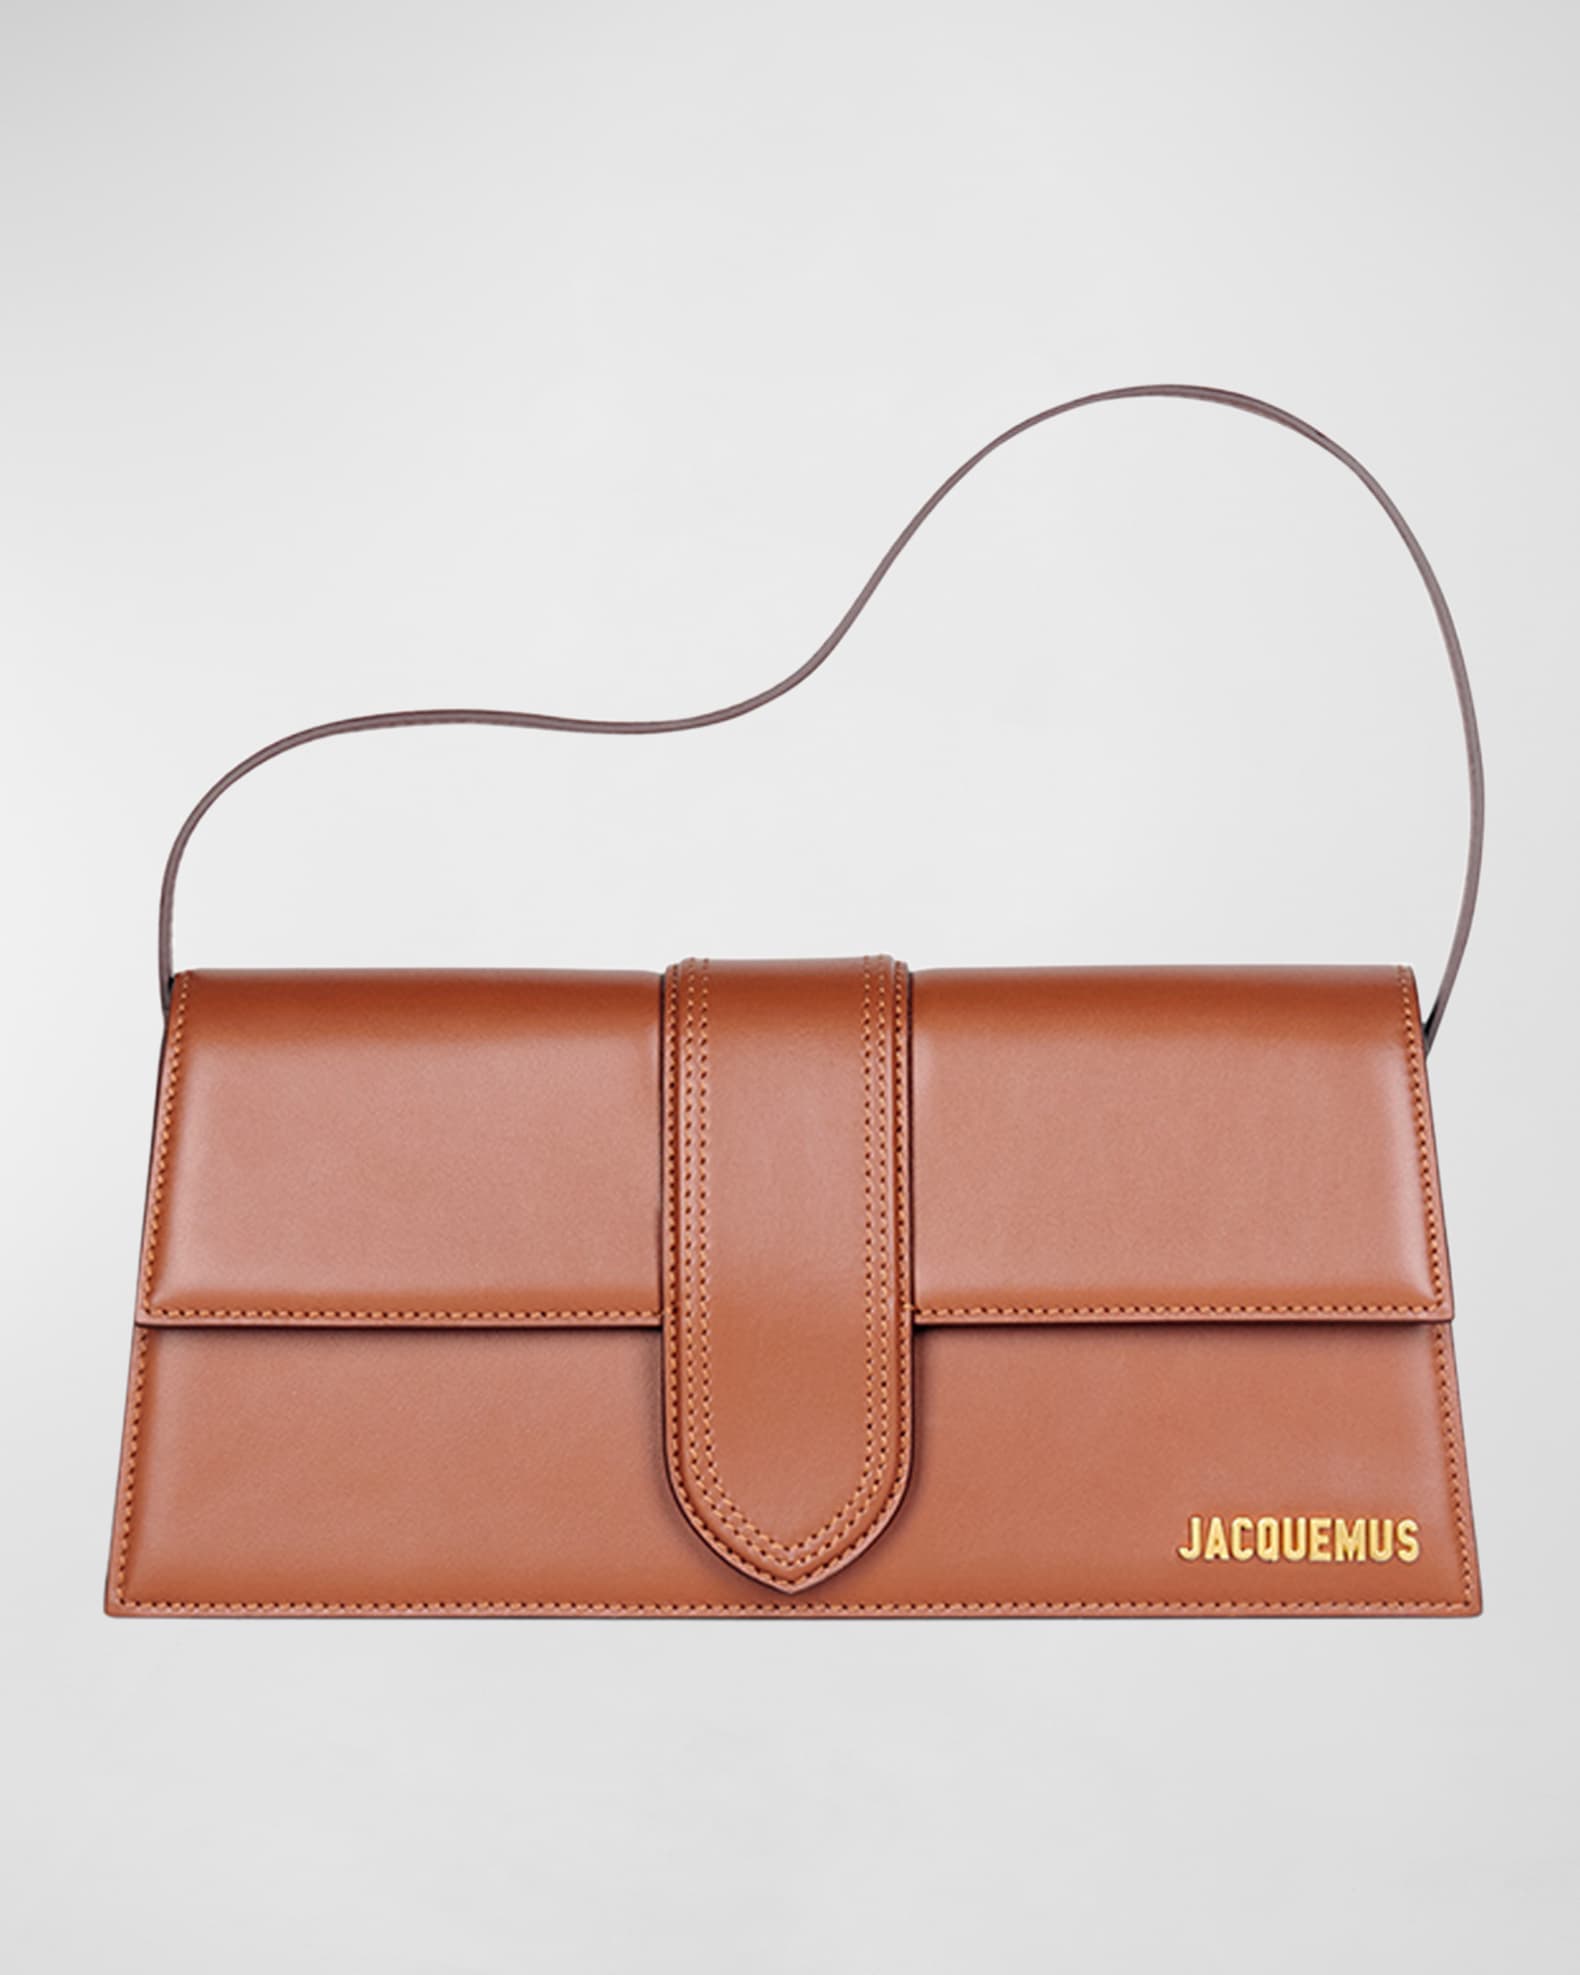 Jacquemus - Women's 'Le Bambino Long' Shoulder Bag - Brown - Leather